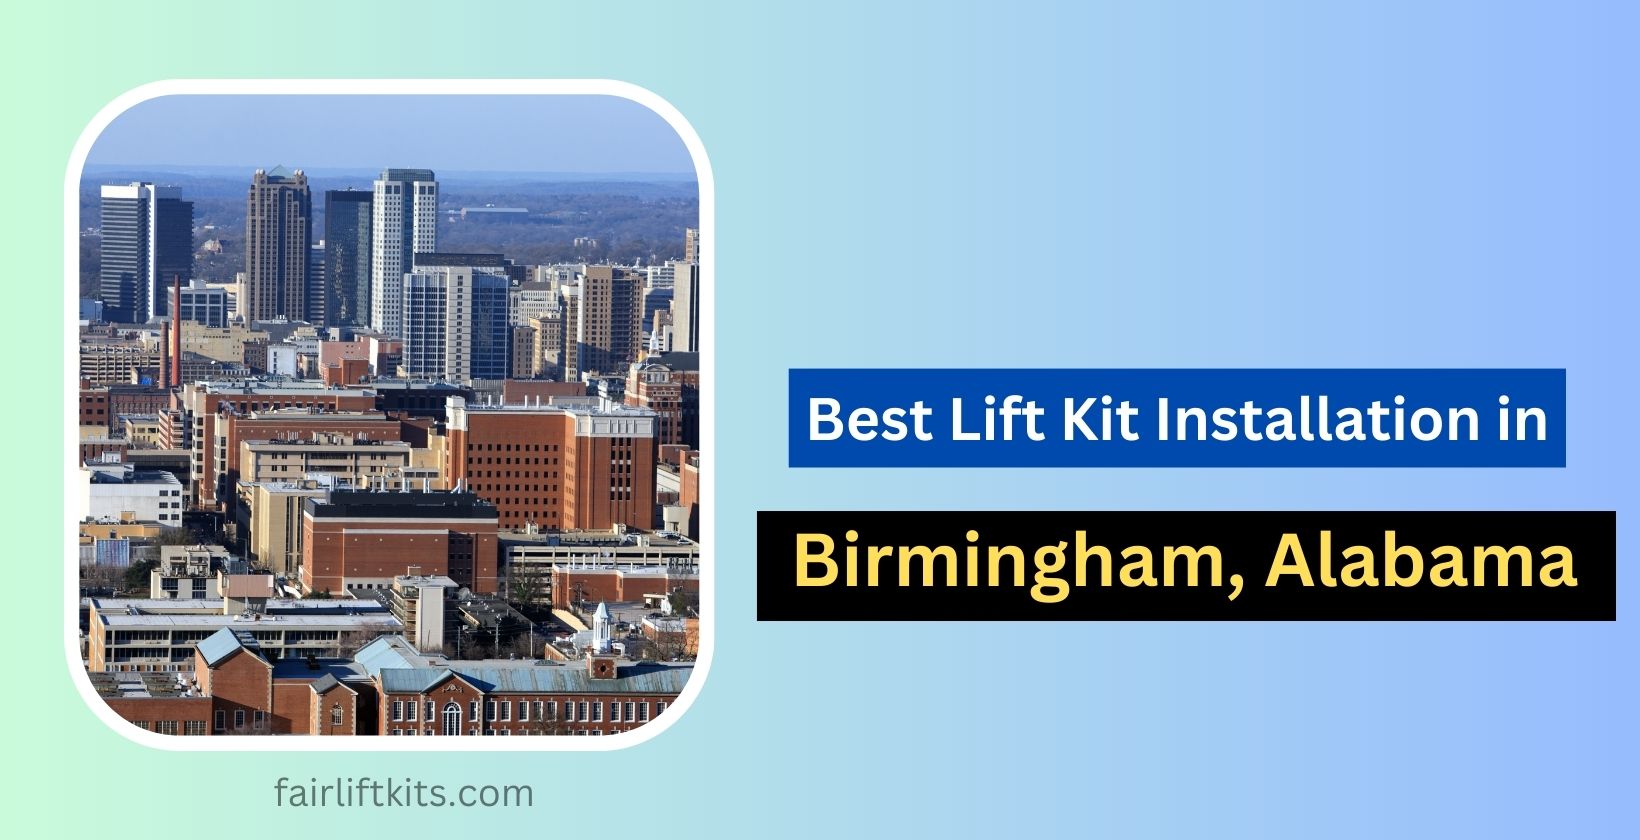 10 Best Lift Kit Installation in Birmingham